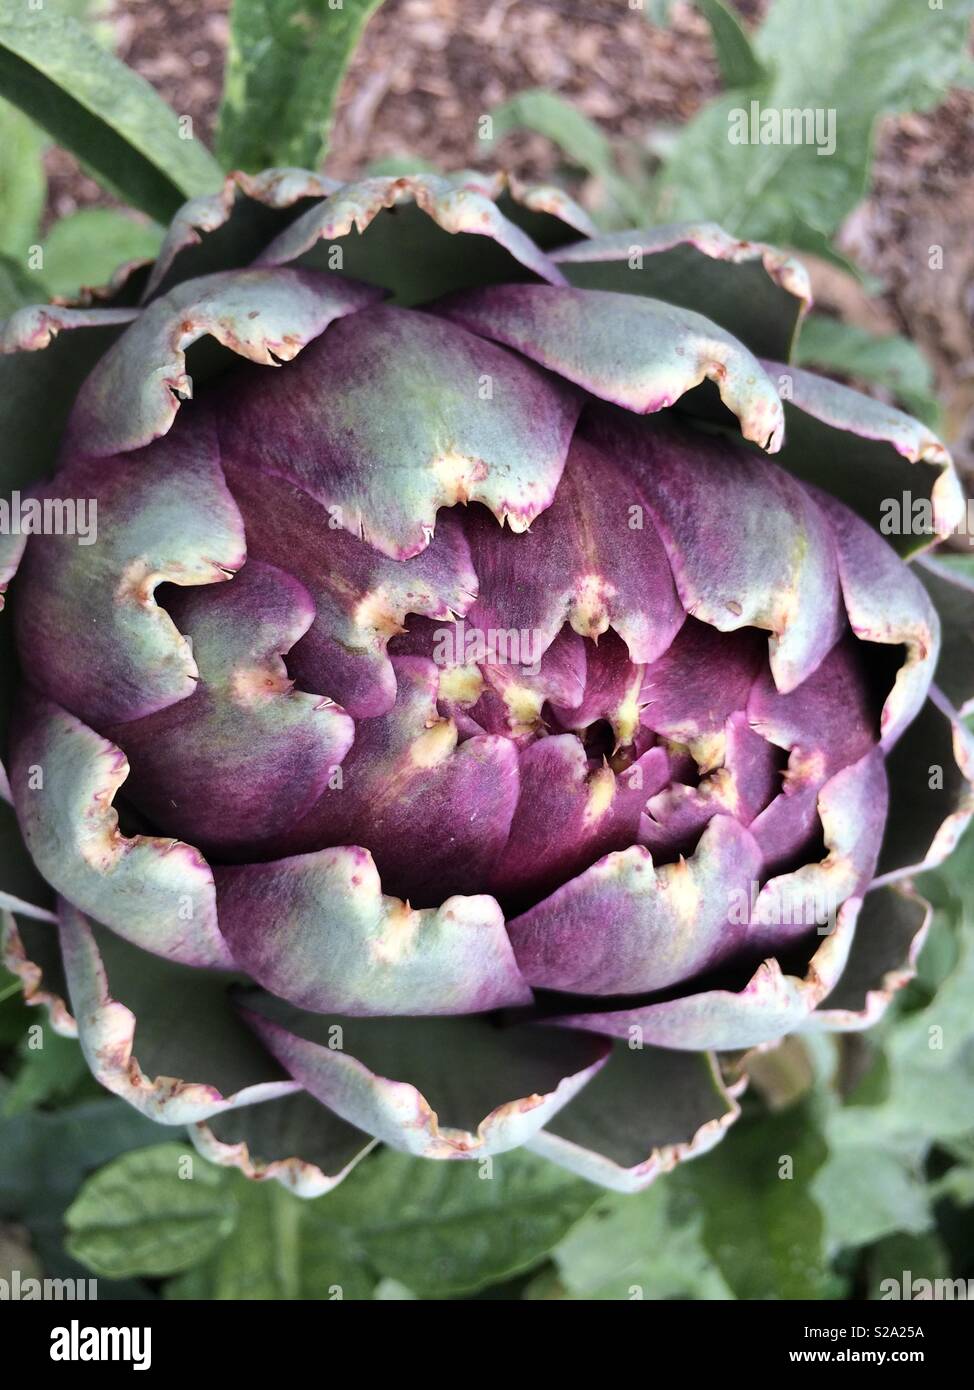 Artichoke close up flower head purple spikey macro Stock Photo